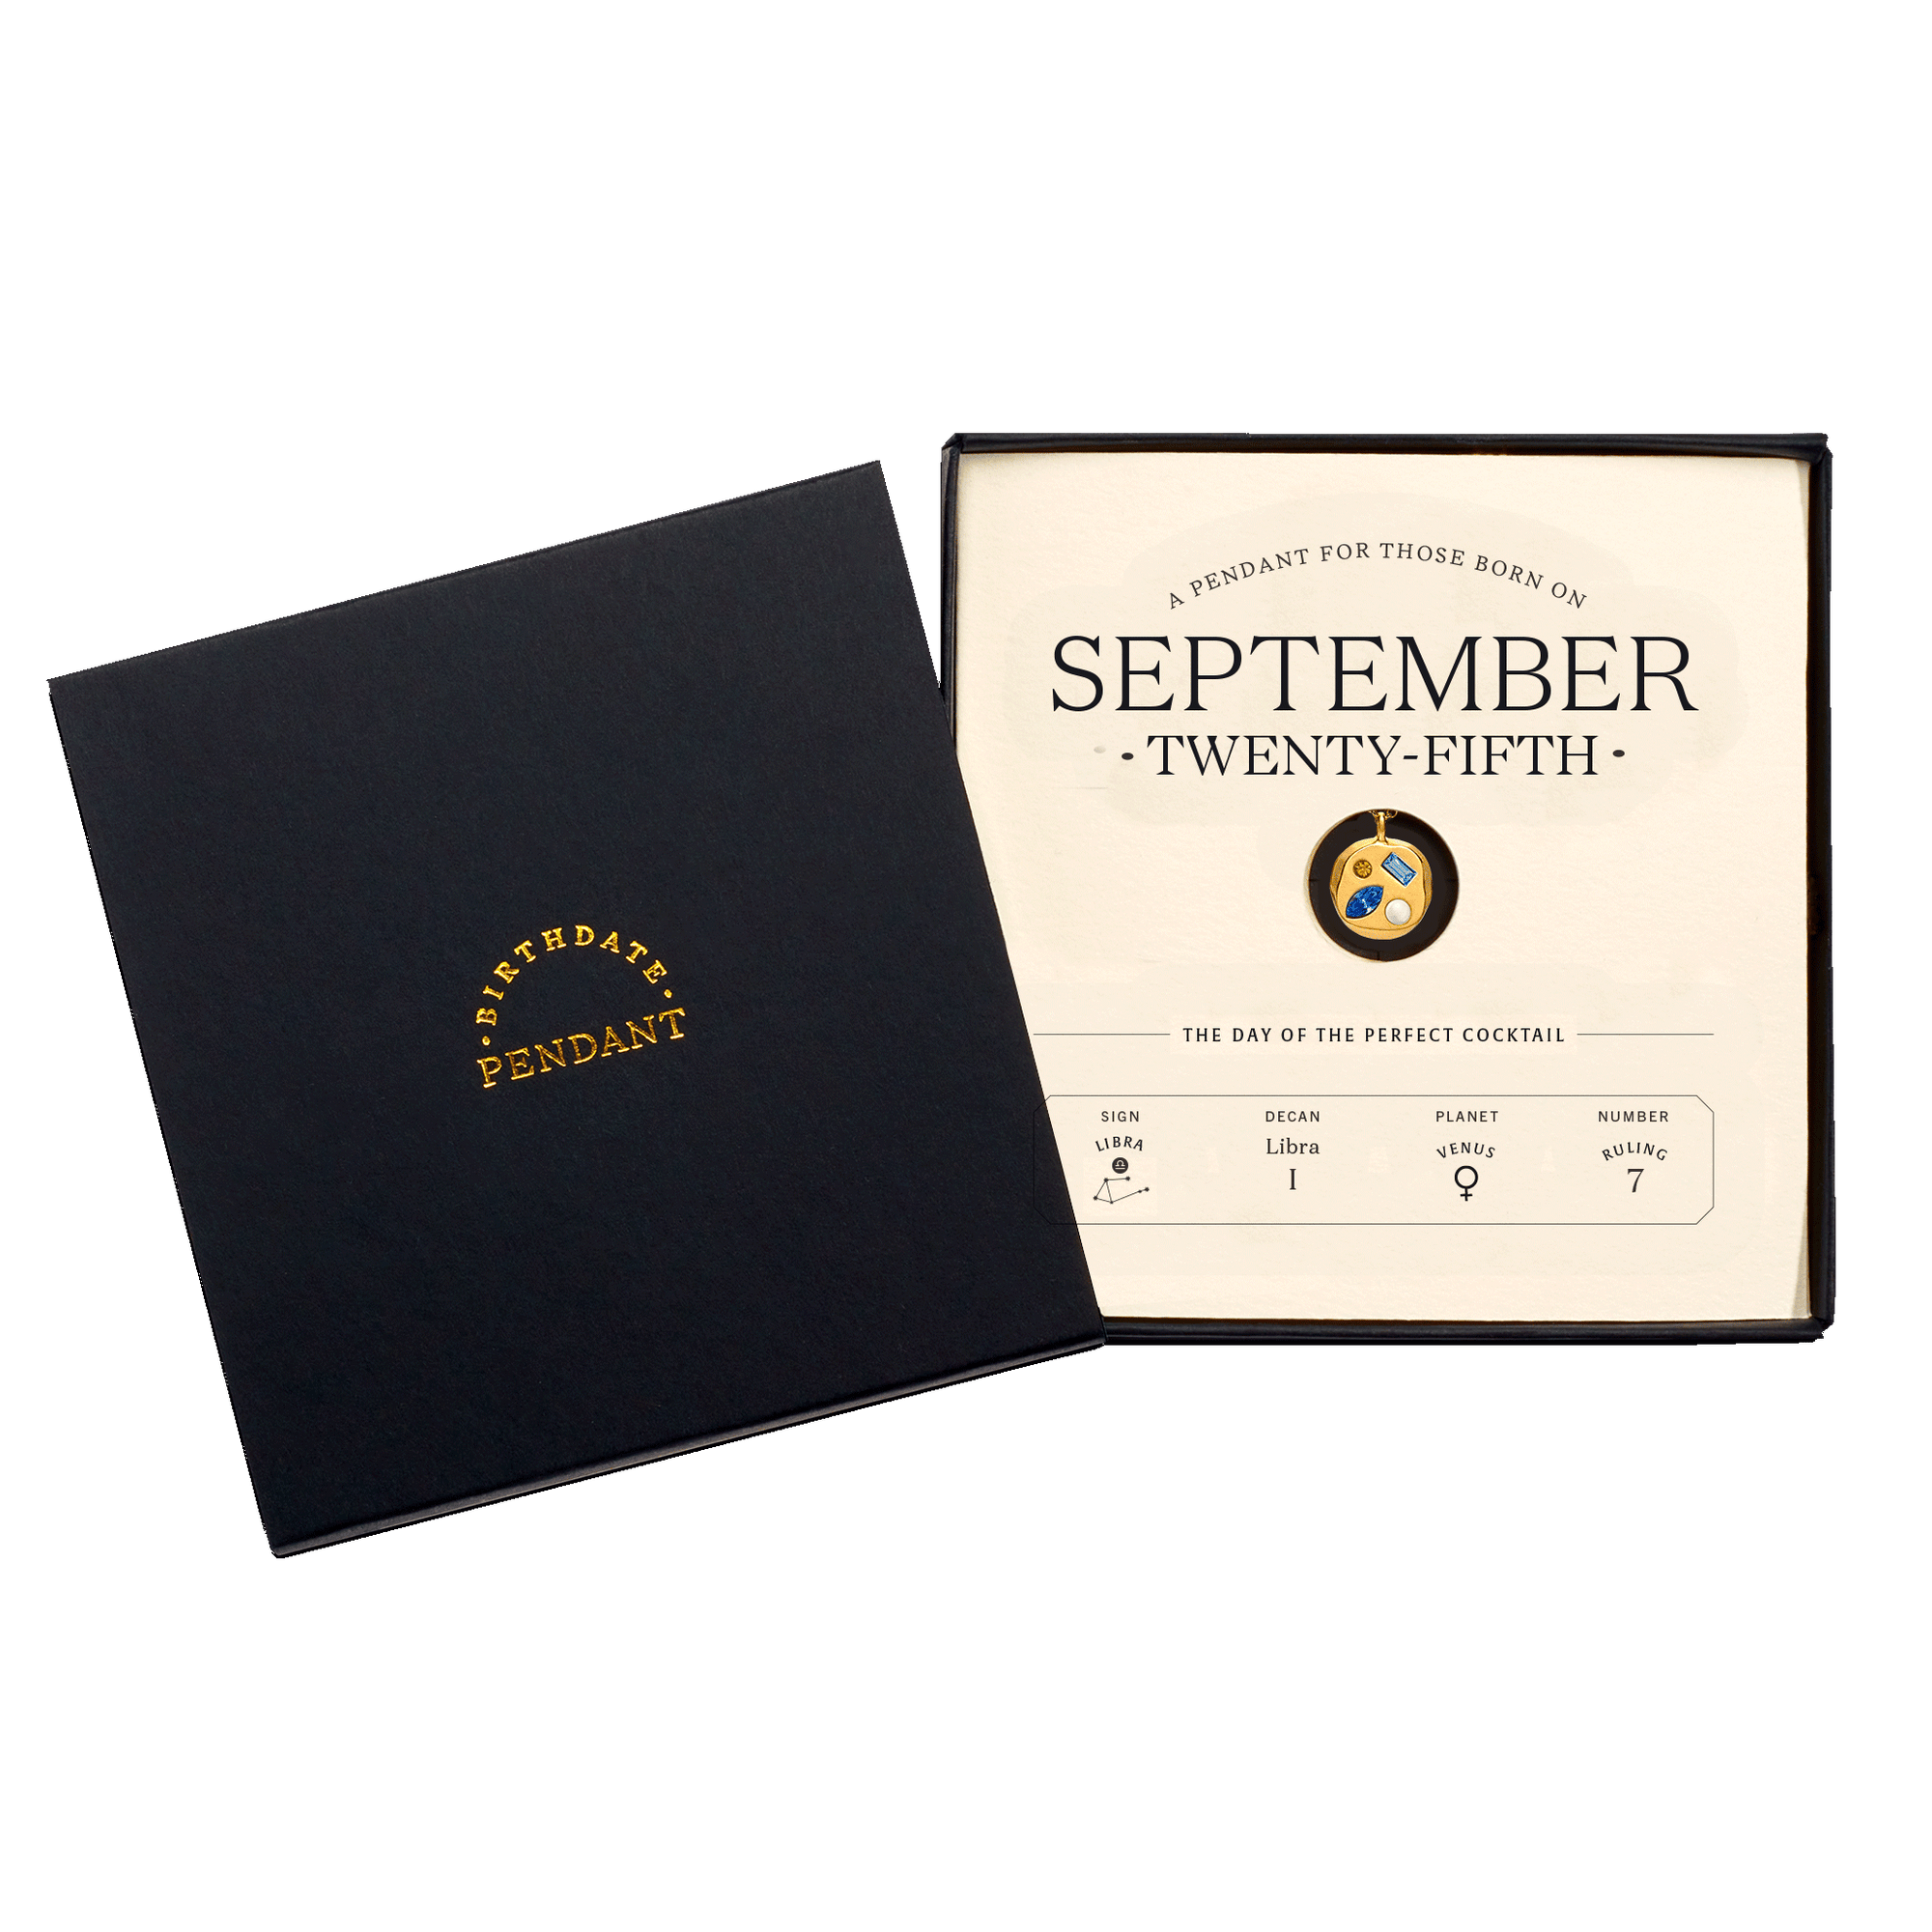 The September Twenty-Fifth Pendant inside its box